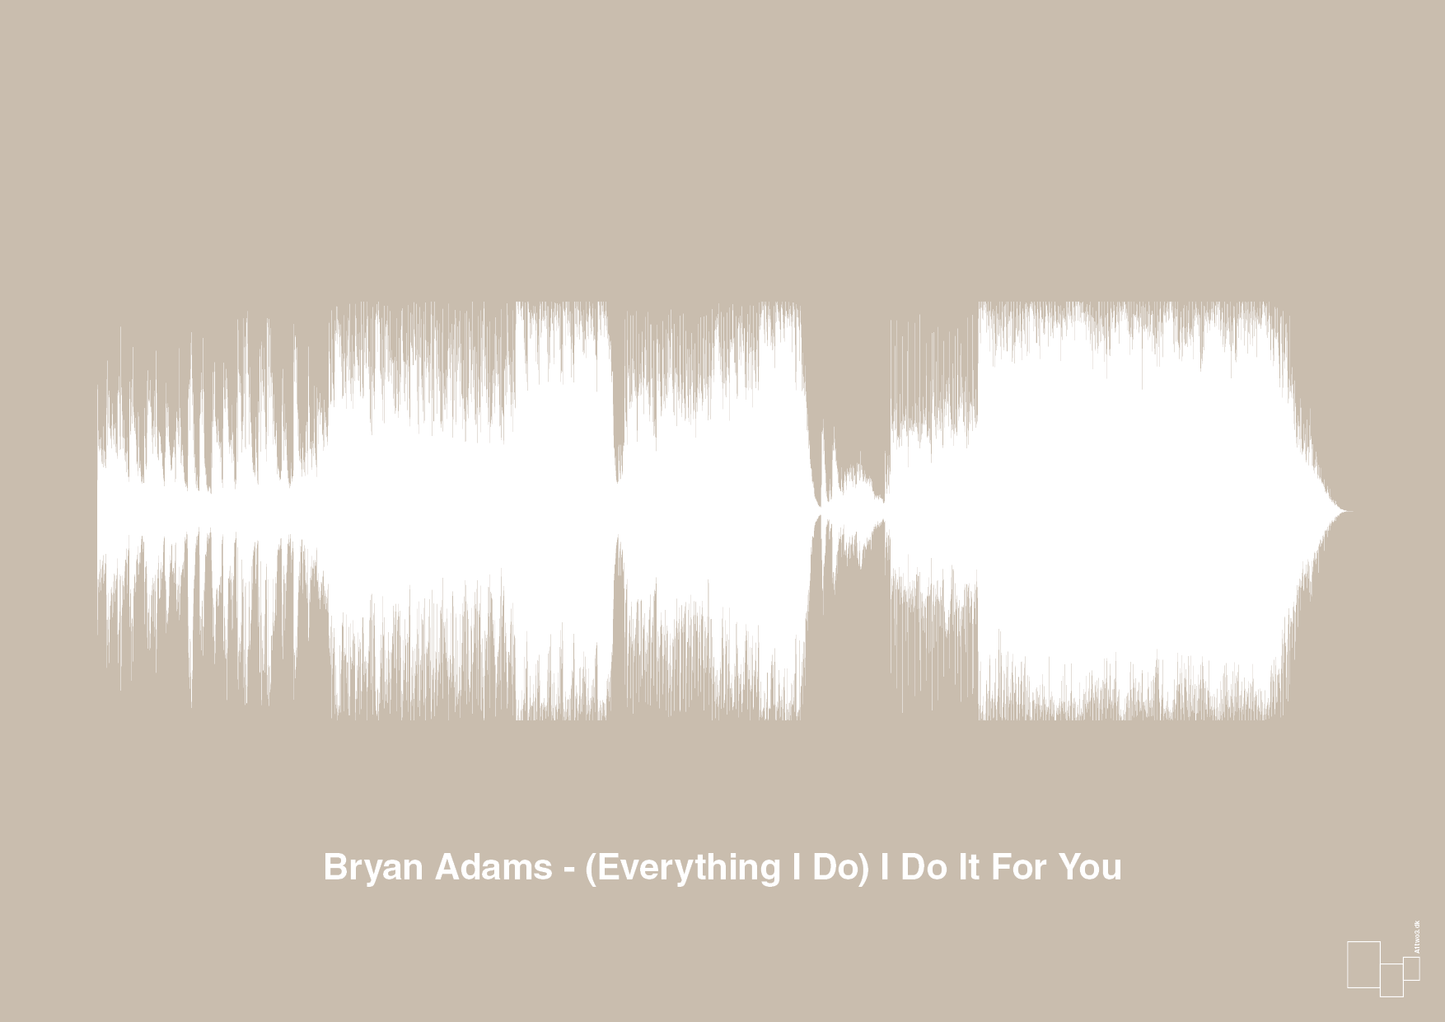 bryan adams - (everything i do) i do it for you - Plakat med Musik i Creamy Mushroom